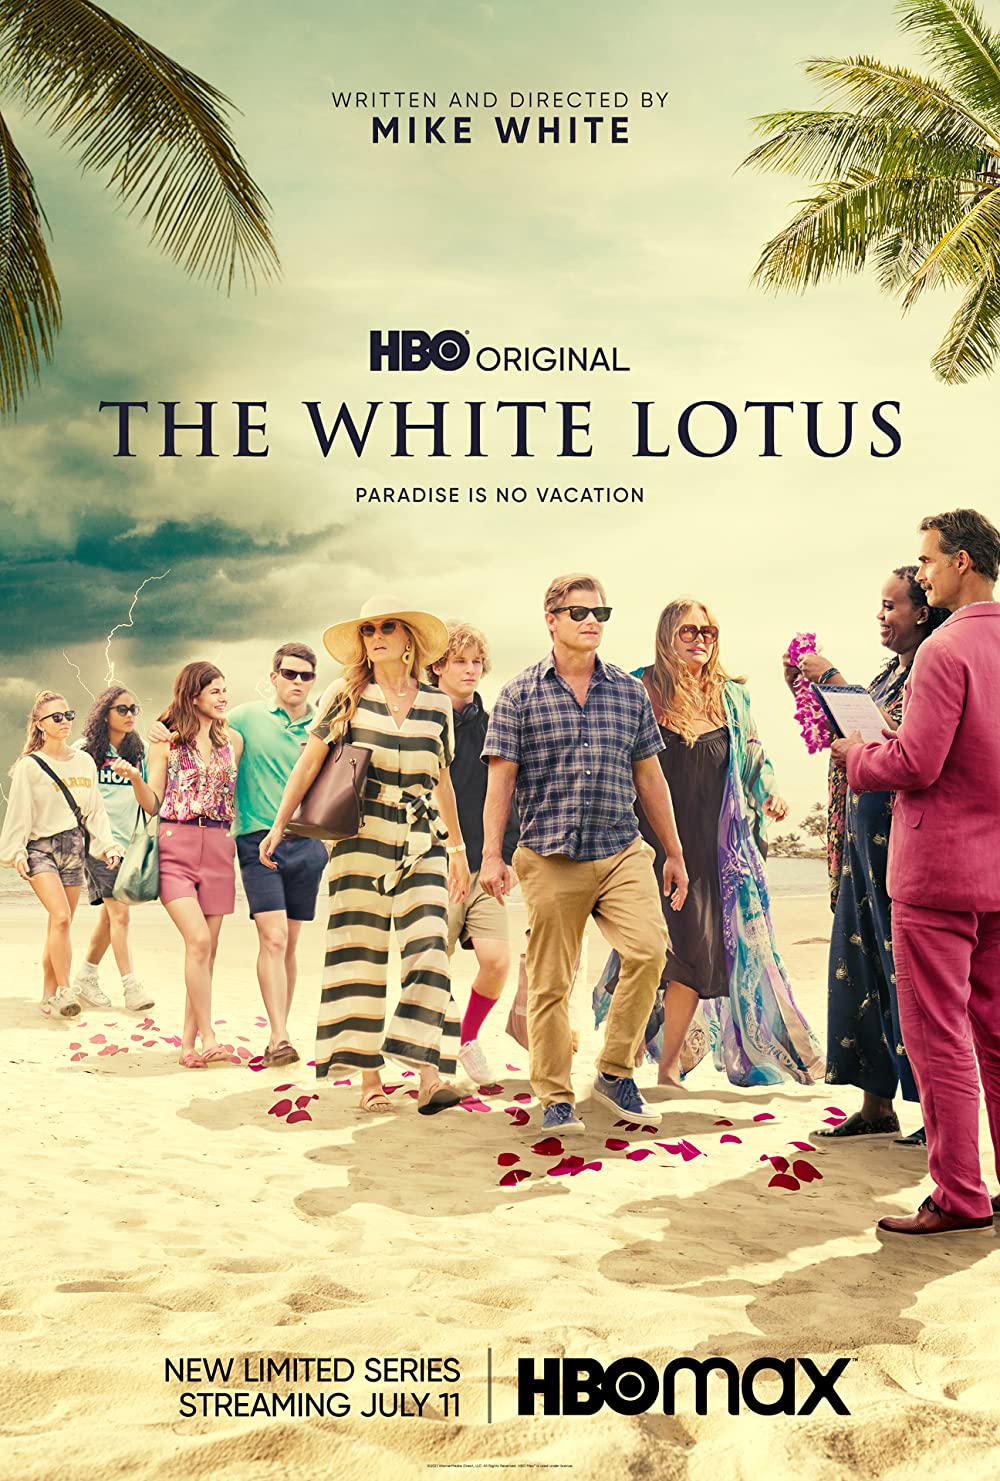 [TV] White Lotus Season 1 (HBO Max)